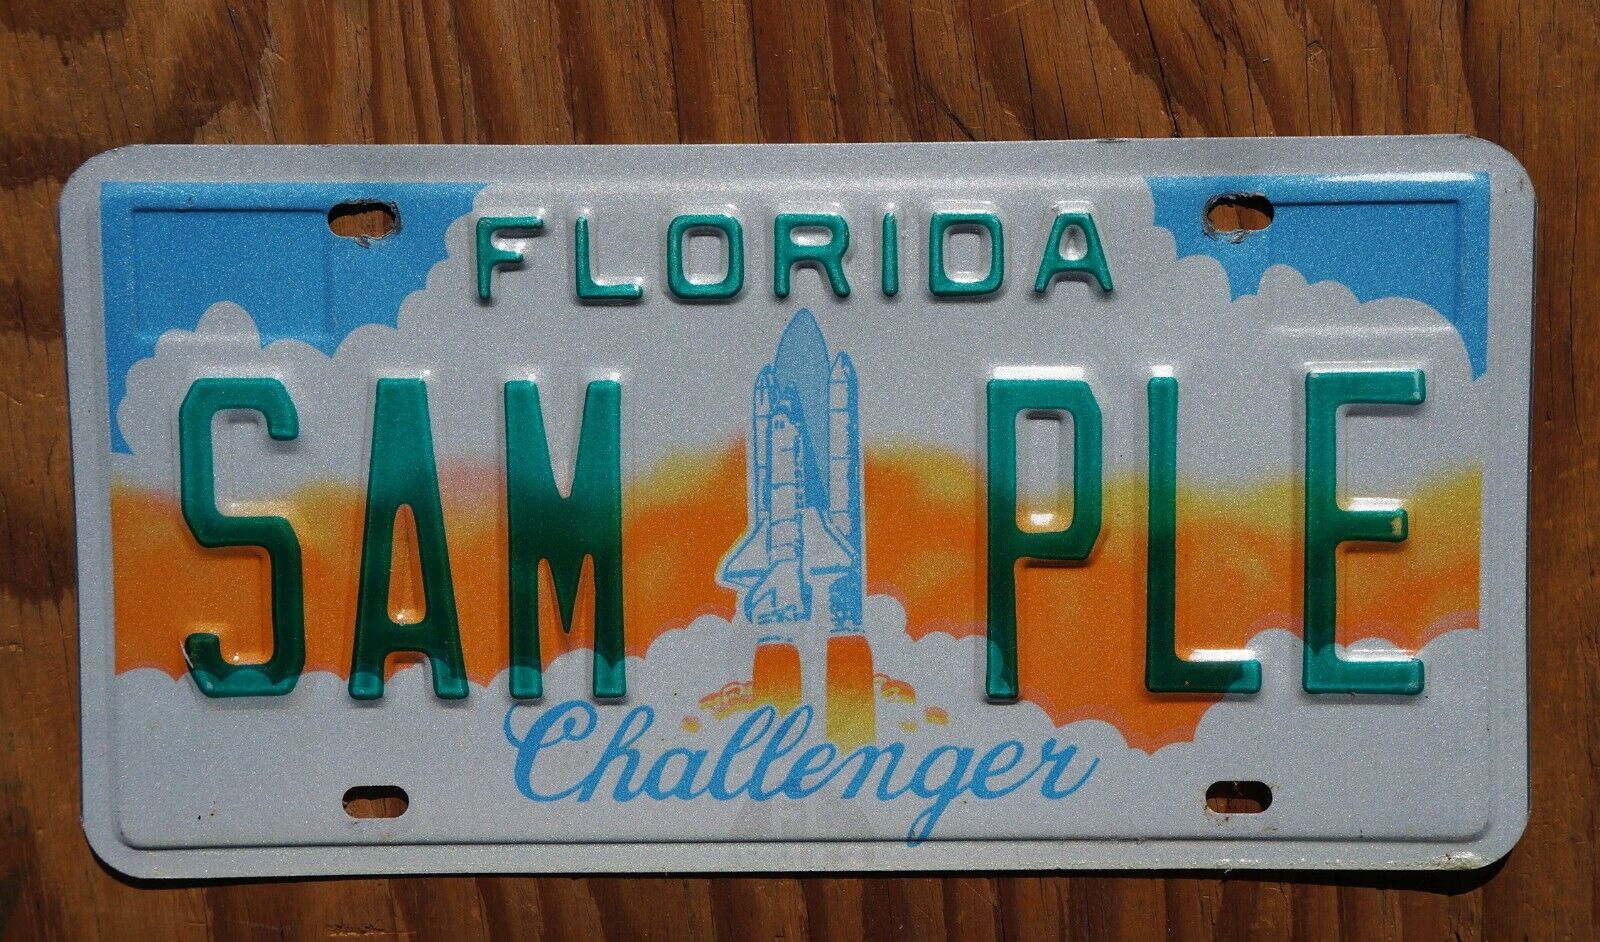 Florida Space Shuttle Challenger Sample License Plate